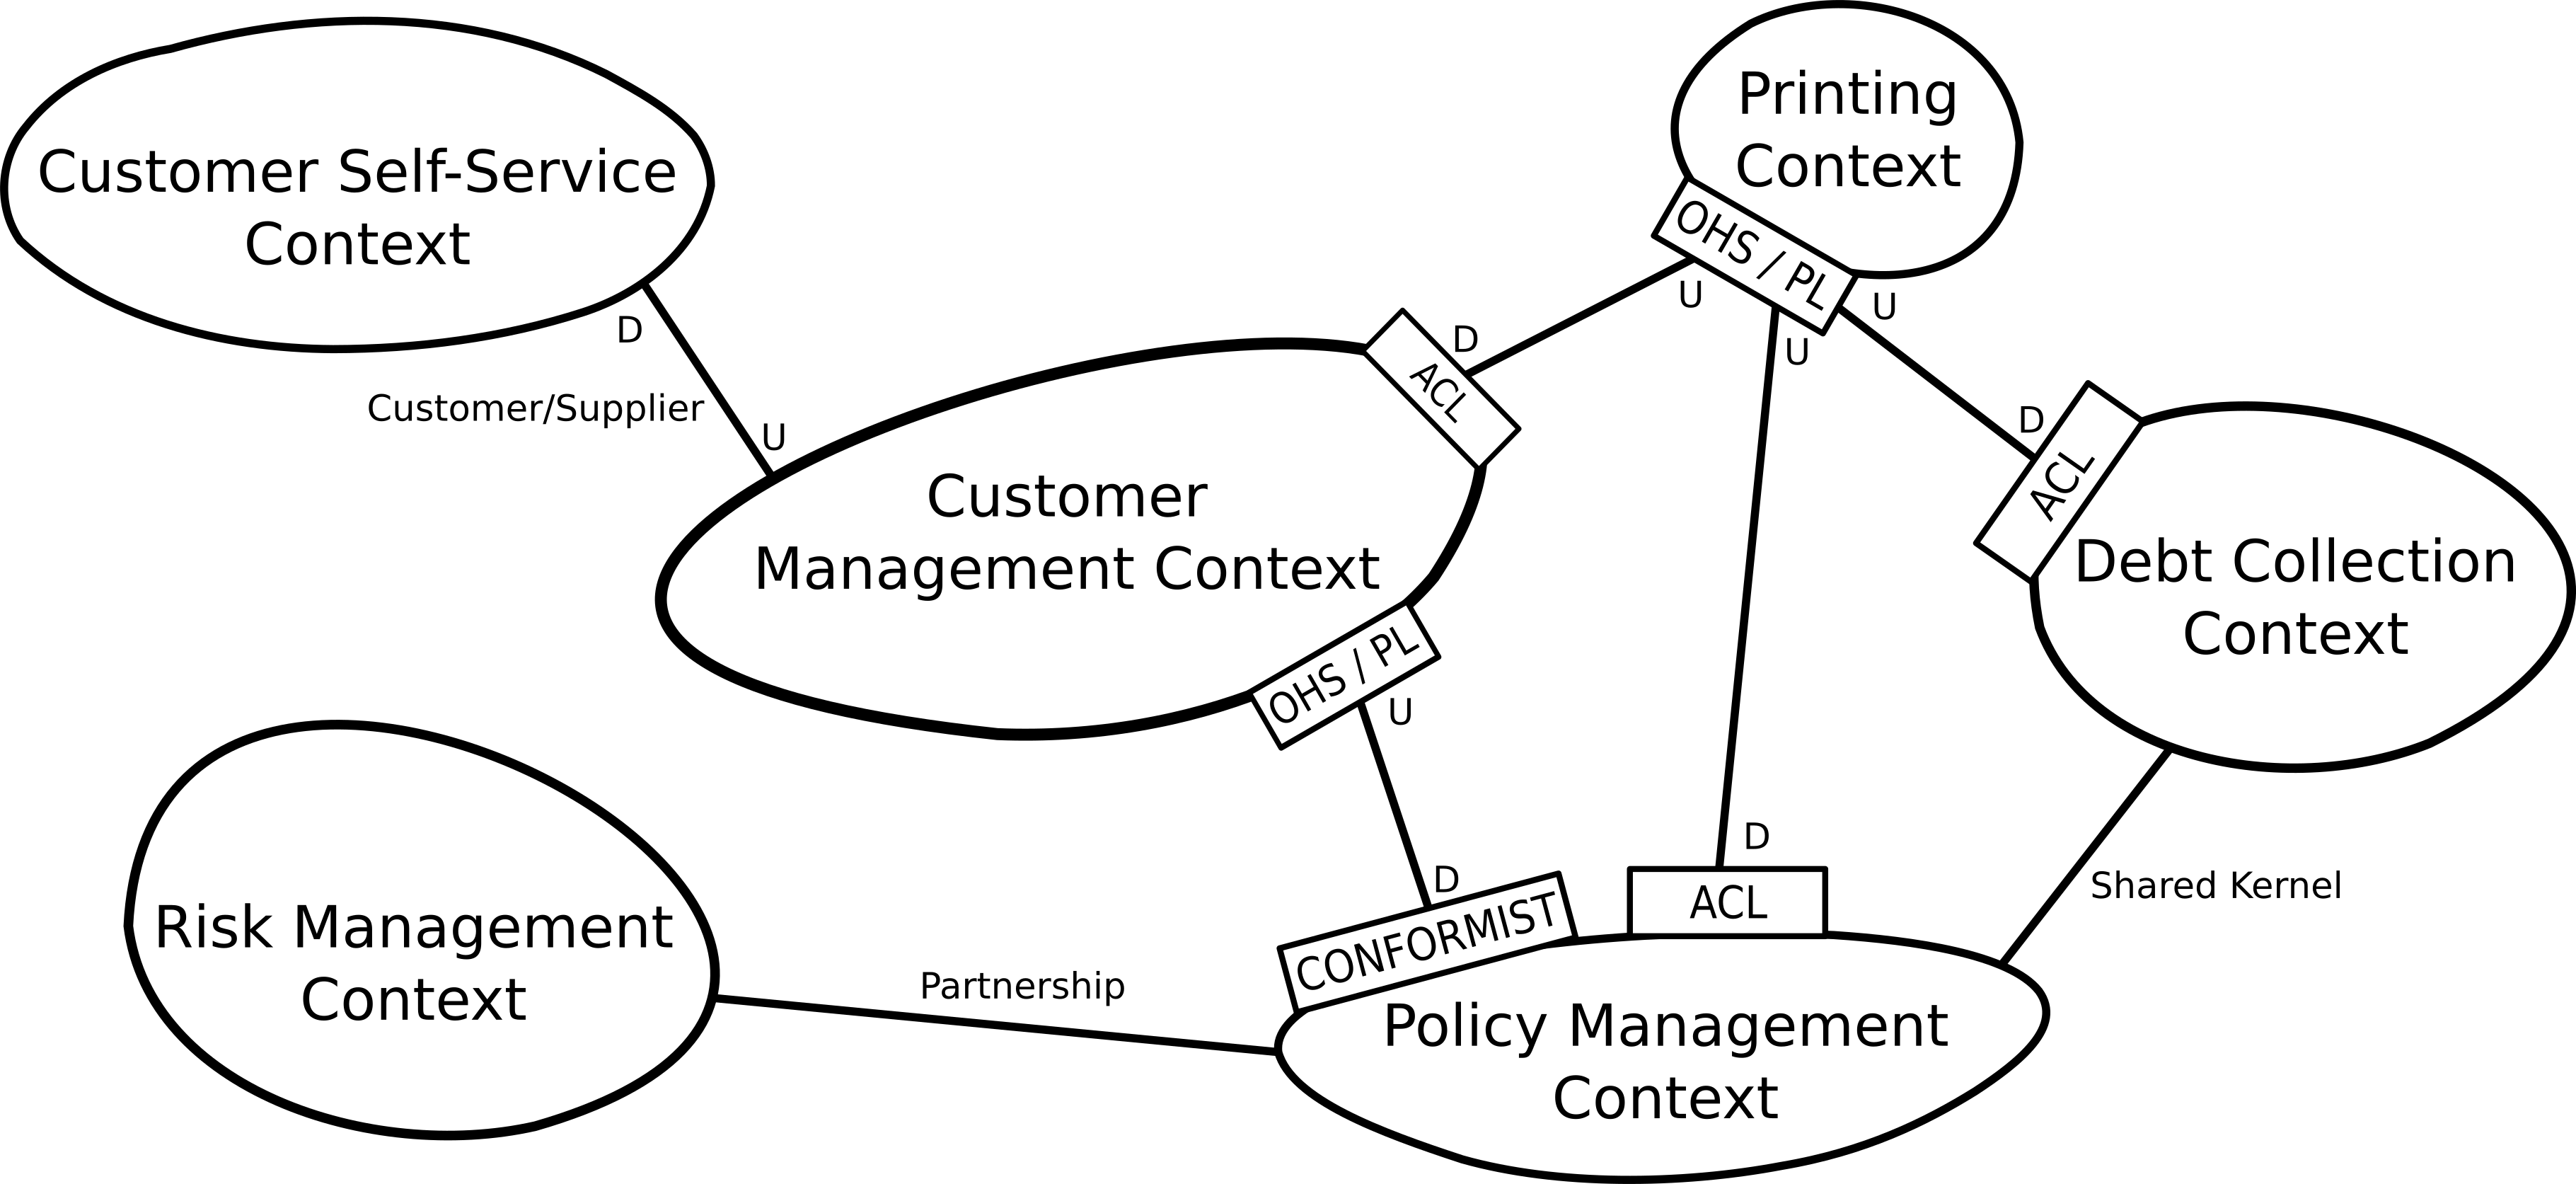 Insurance Company Example Context Map